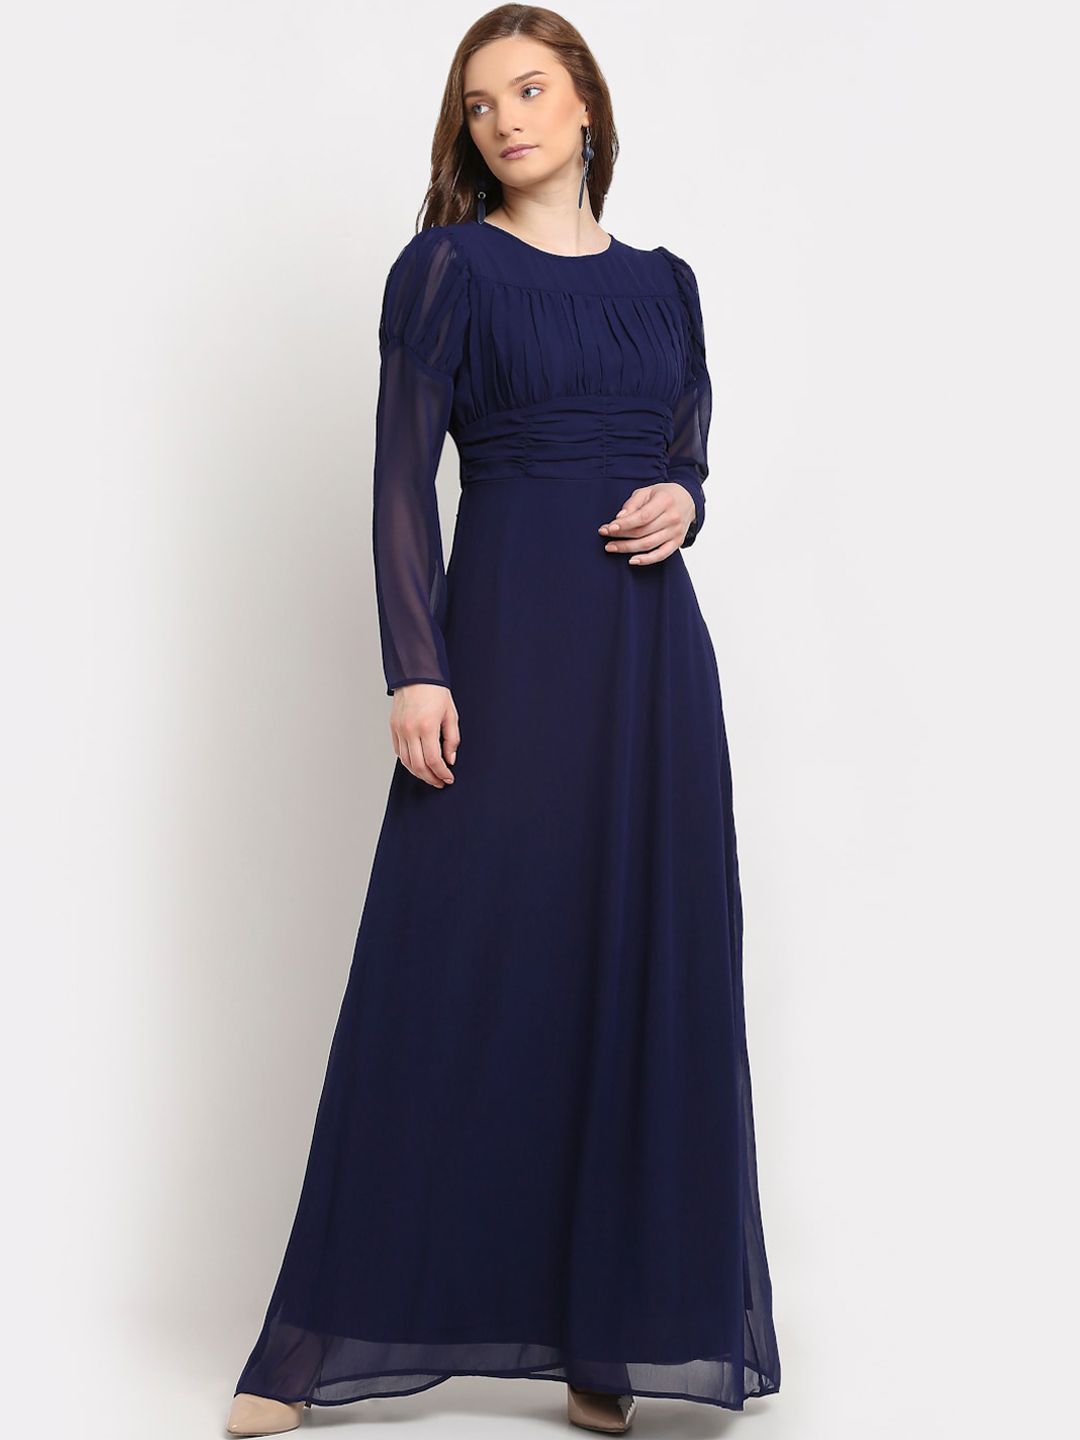 La Zoire Navy Blue Georgette Maxi Dress Price in India